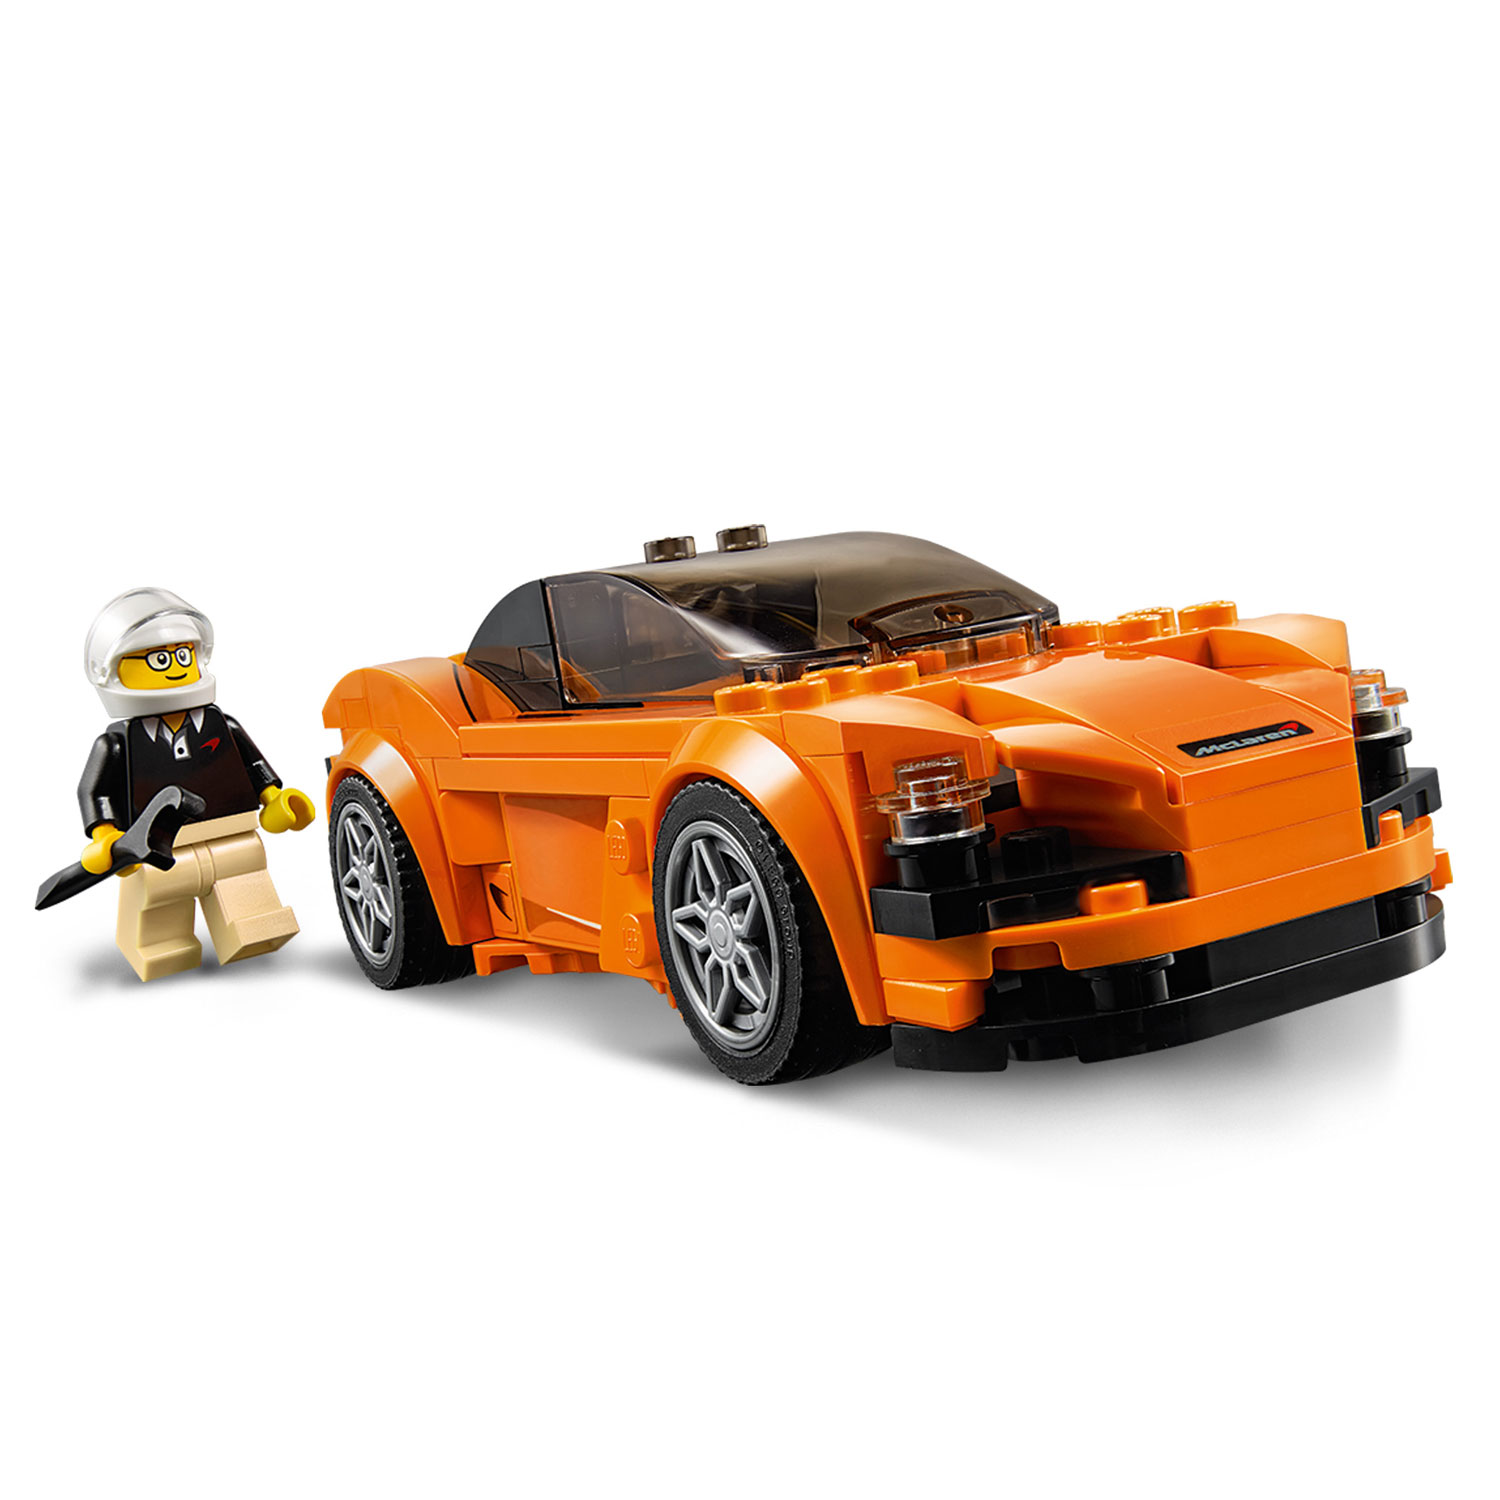 LEGO Speed Champions 75880 McClaren